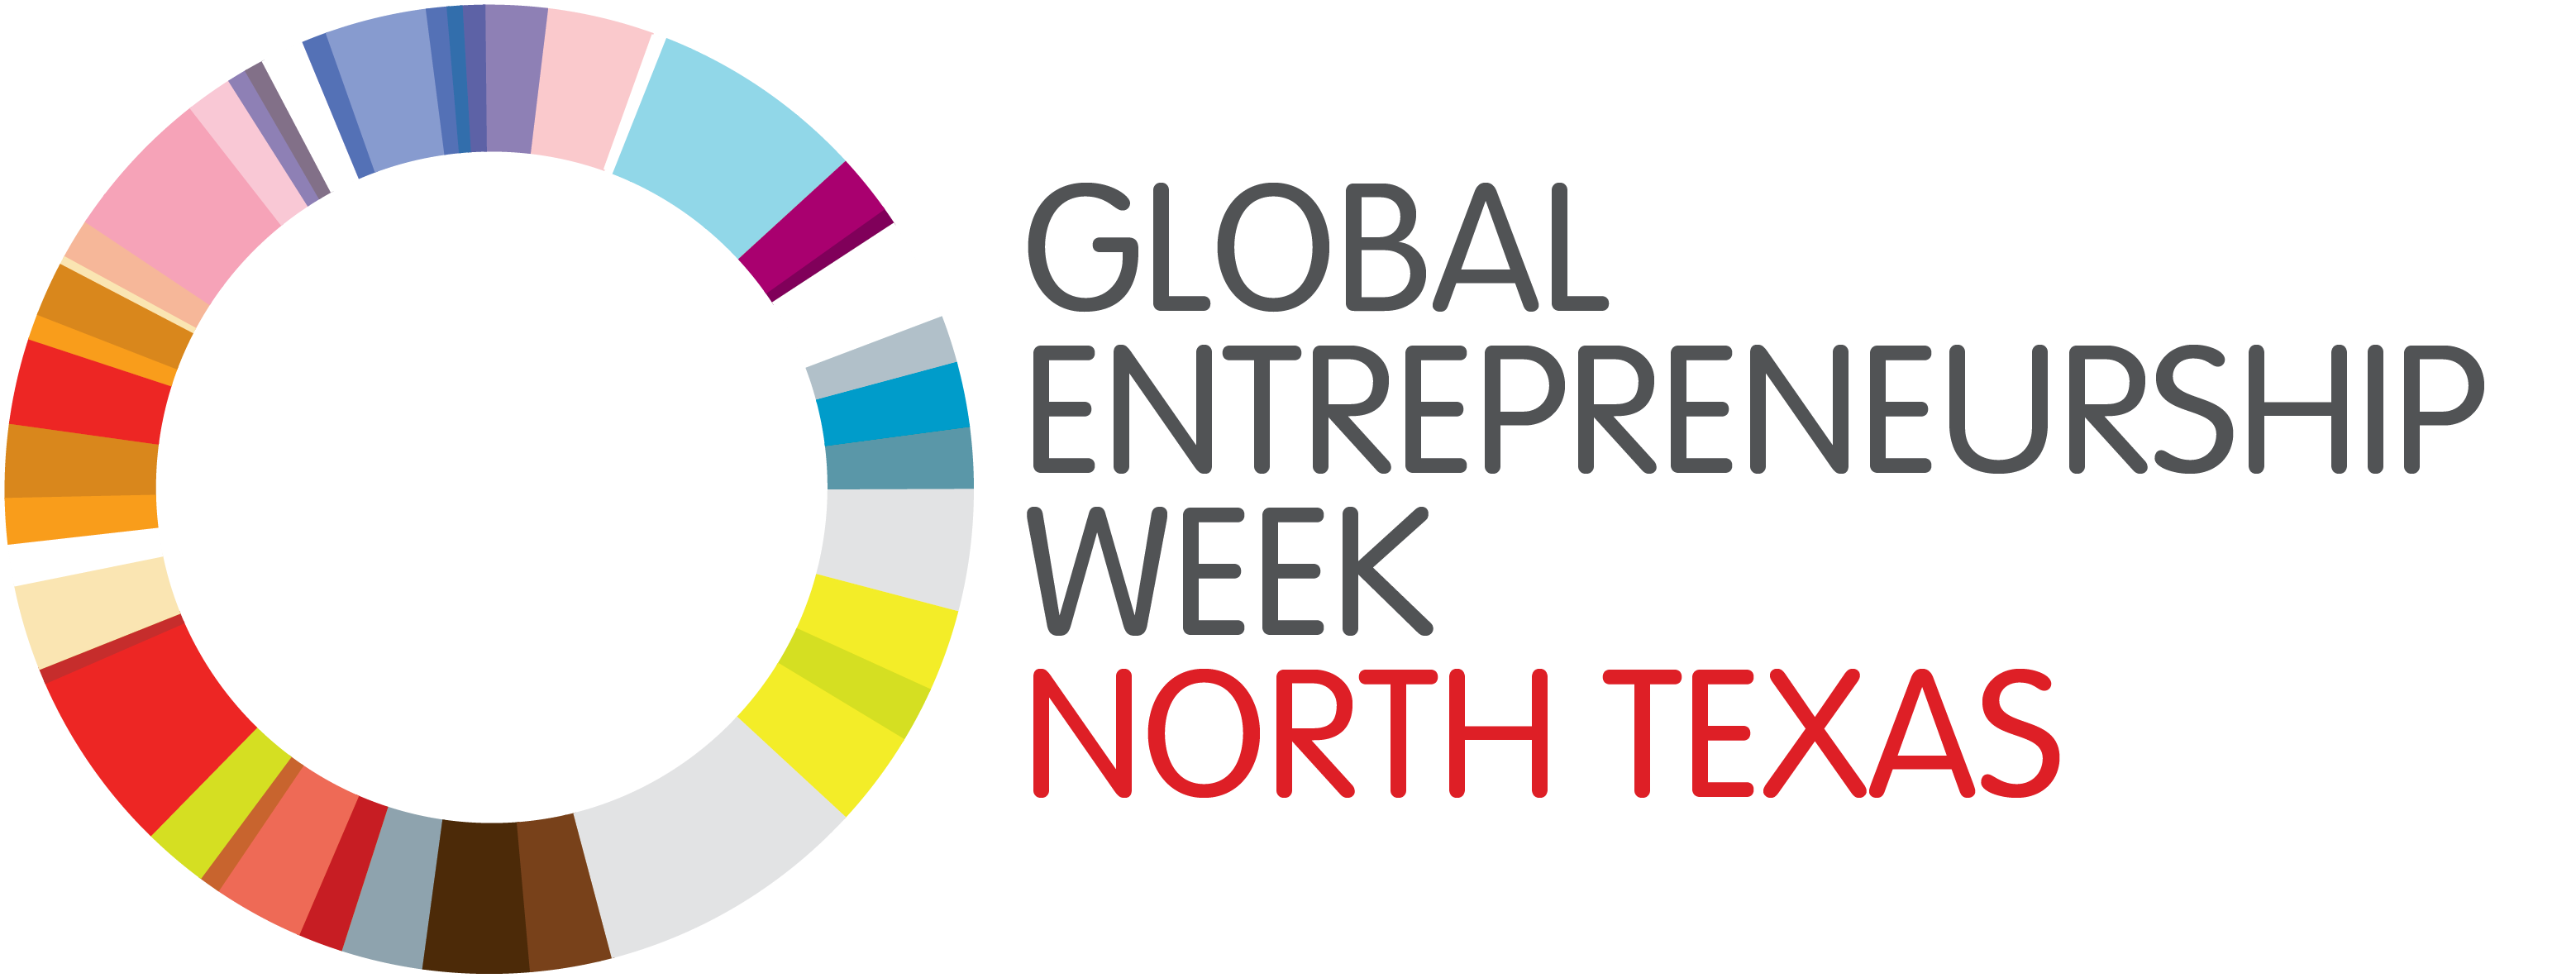 Global Entrepreneurship Week North Texas 